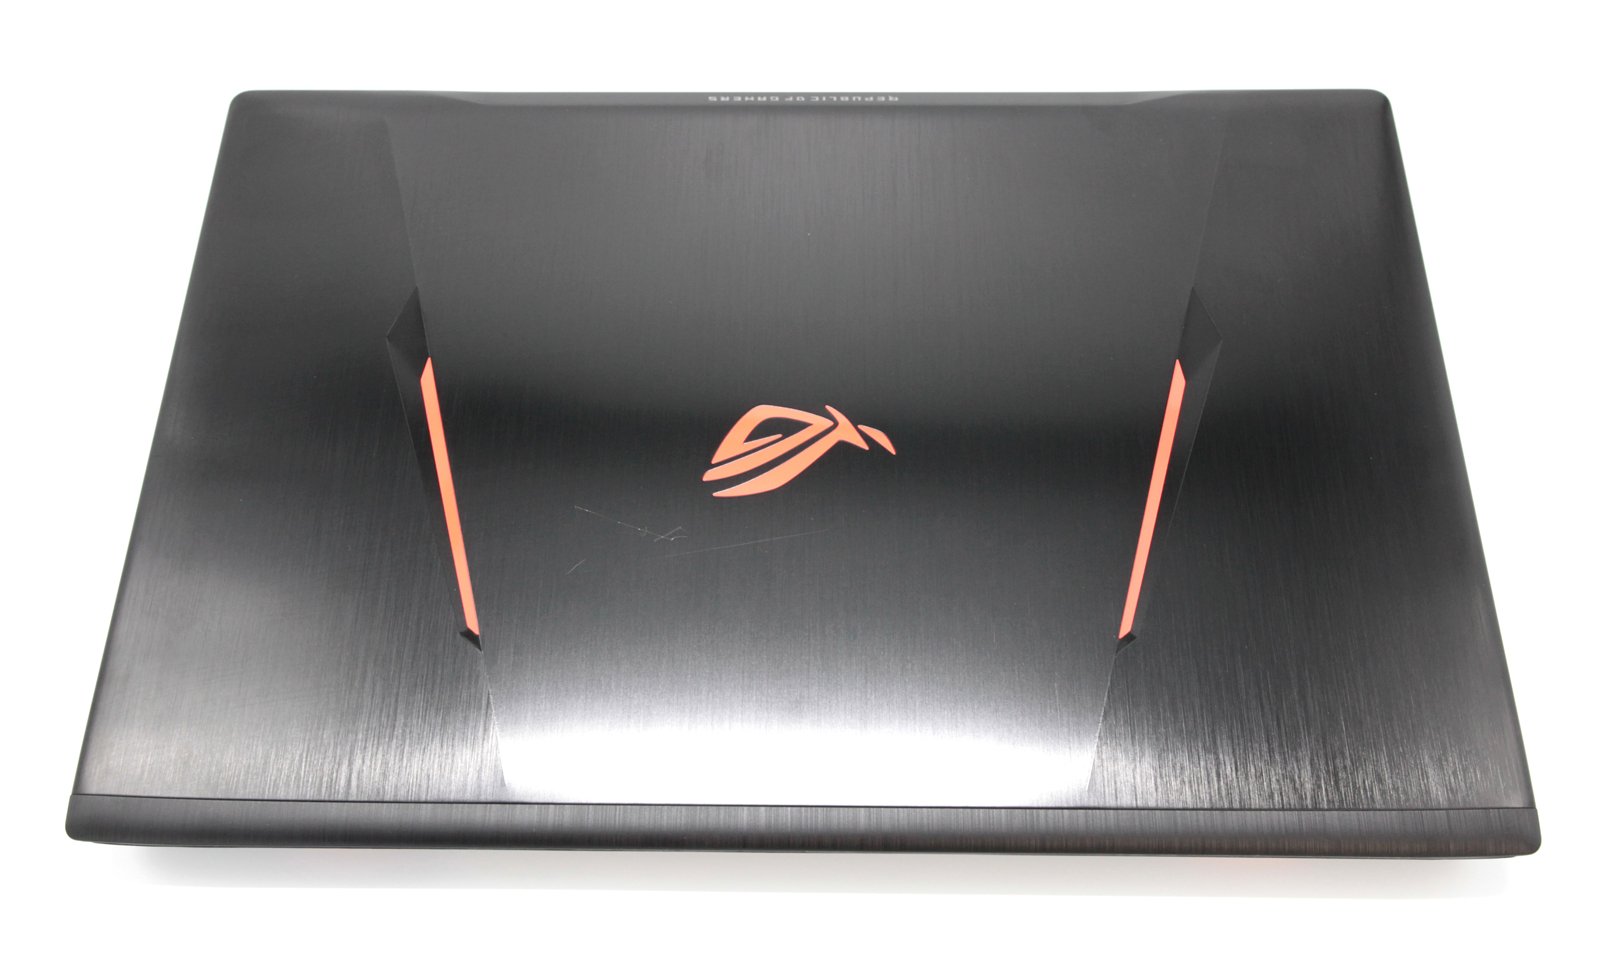 ASUS Strix GL753VD 17.3" Gaming Laptop: i5-7300HQ, GTX 1050, 12GB RAM Warranty - CruiseTech